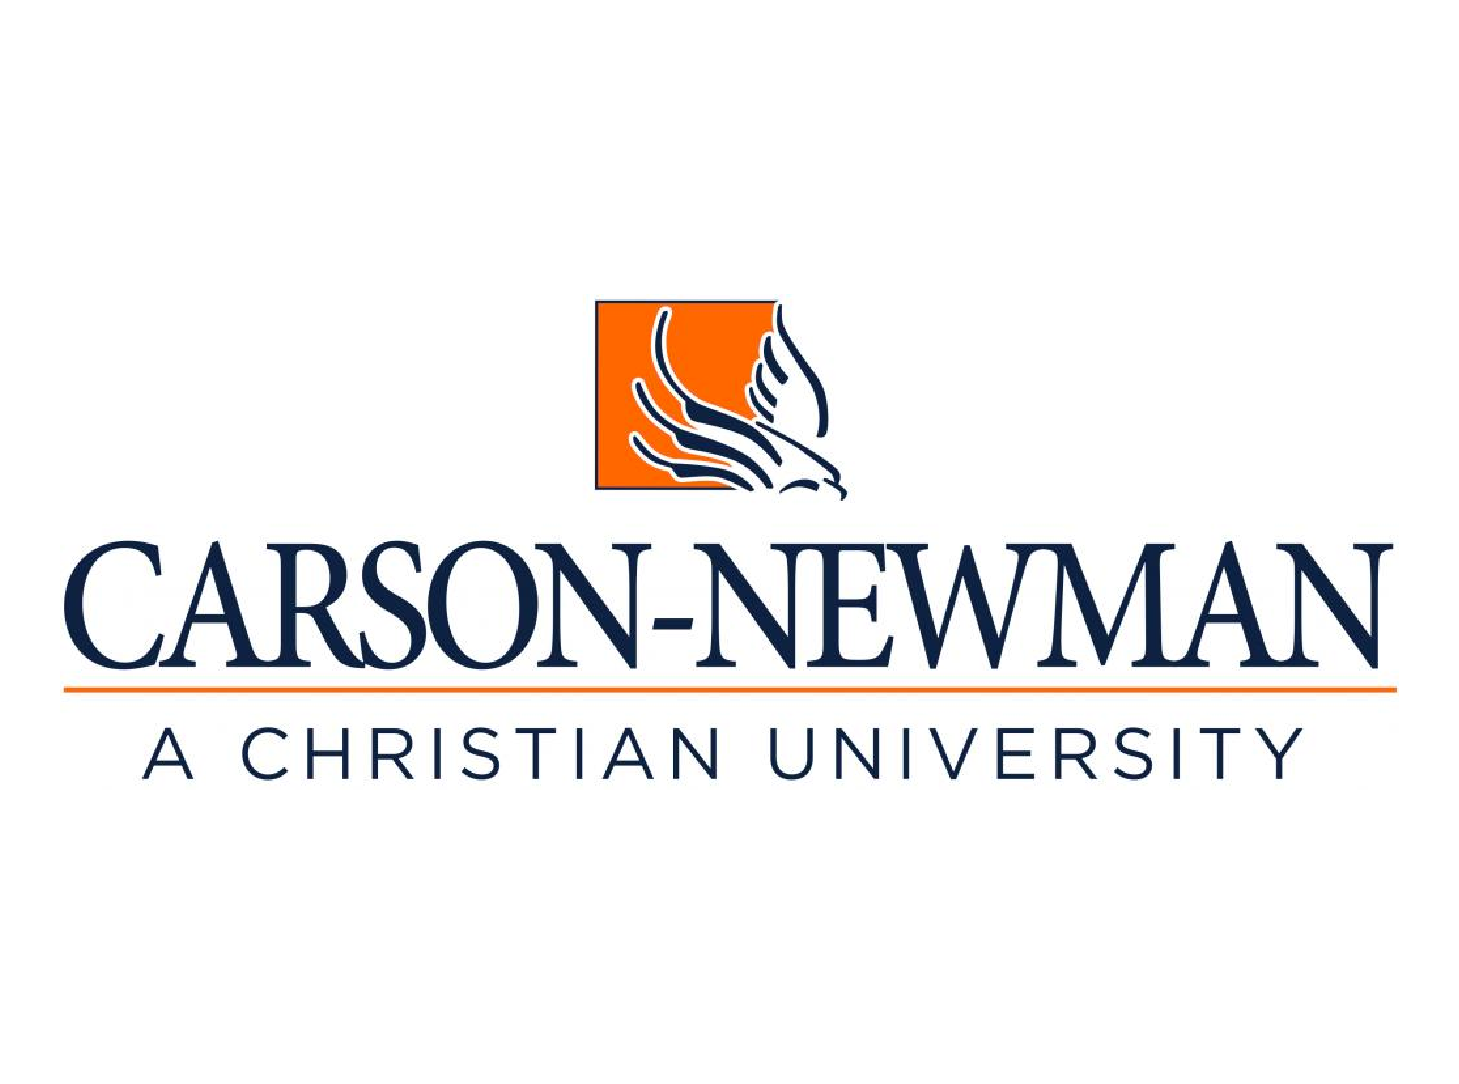 Carson Newman University